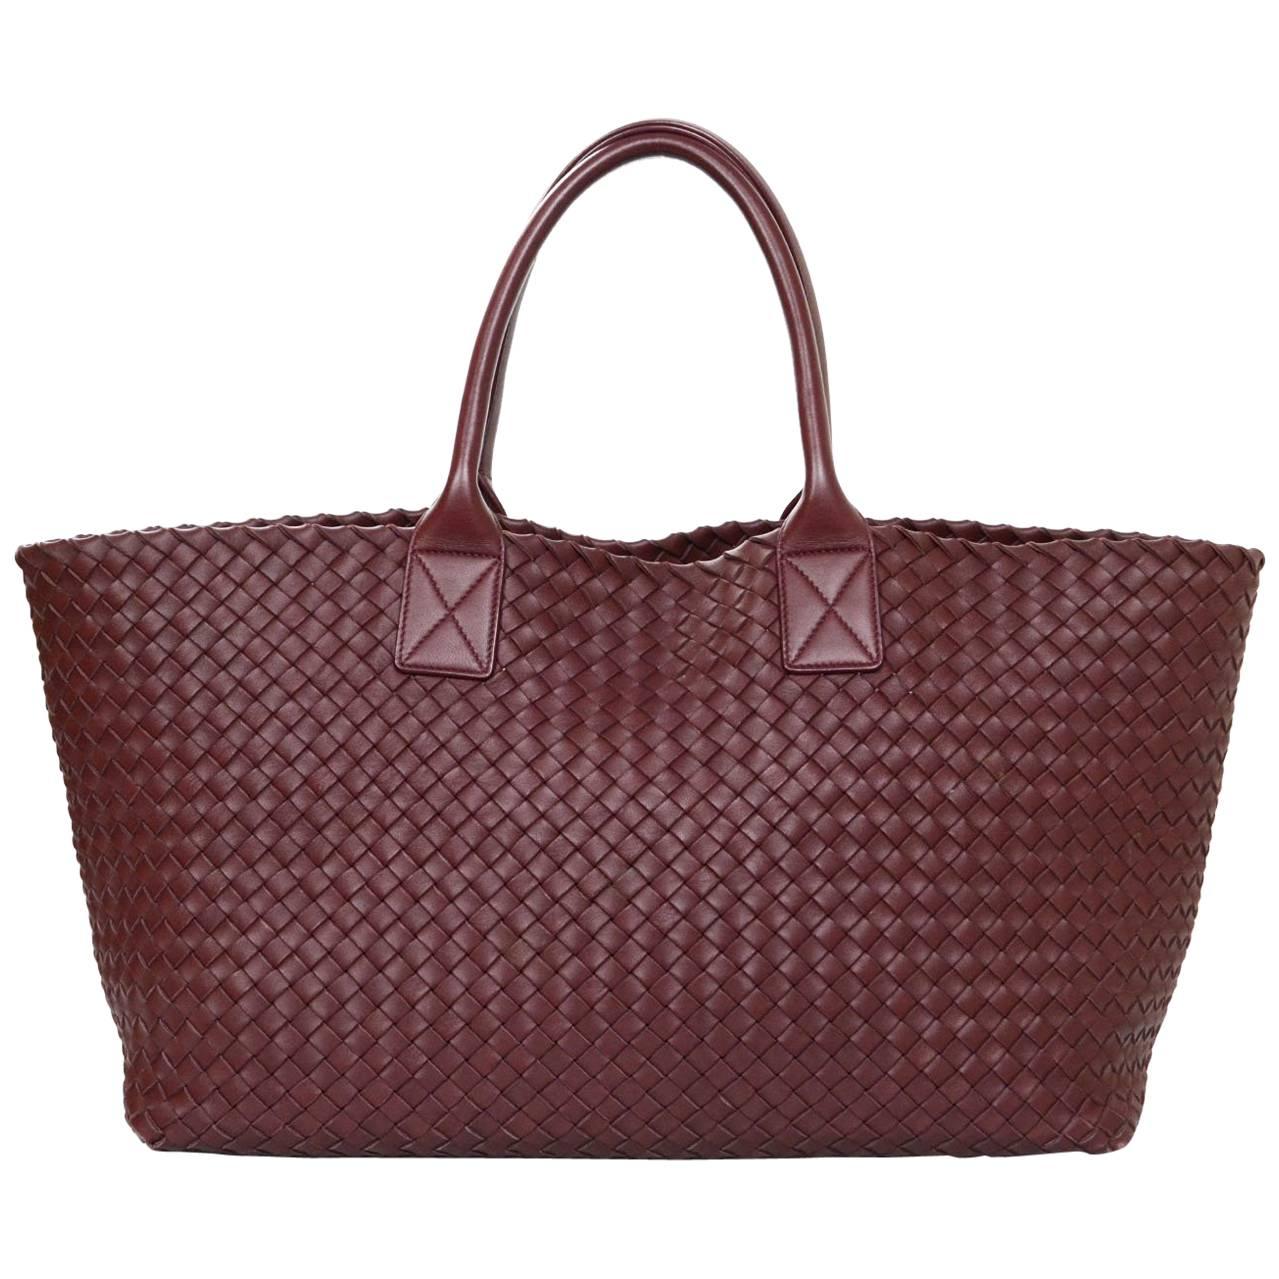 Bottega Veneta Barolo Burgundy Hand Woven Leather Medium Cabat Tote Bag $7, 000